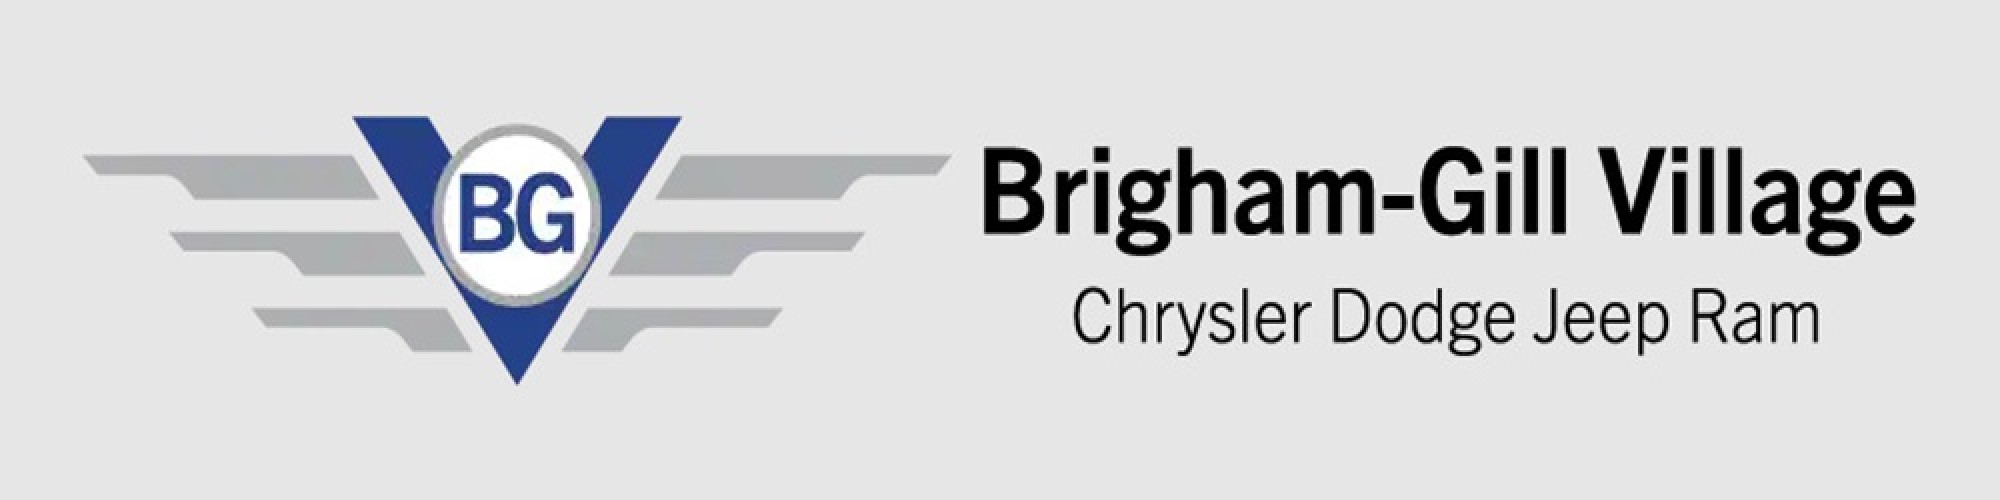 Brigham-Gill Village Chrysler Dodge Jeep Ram cover image